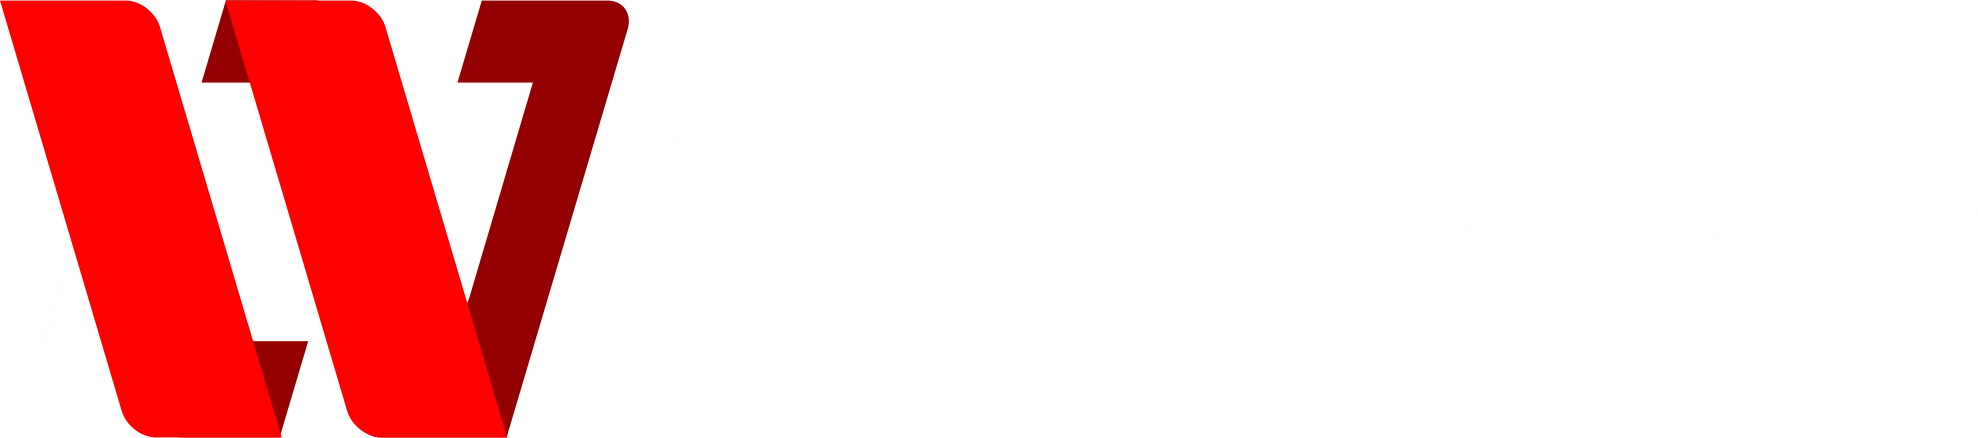 webscard logo